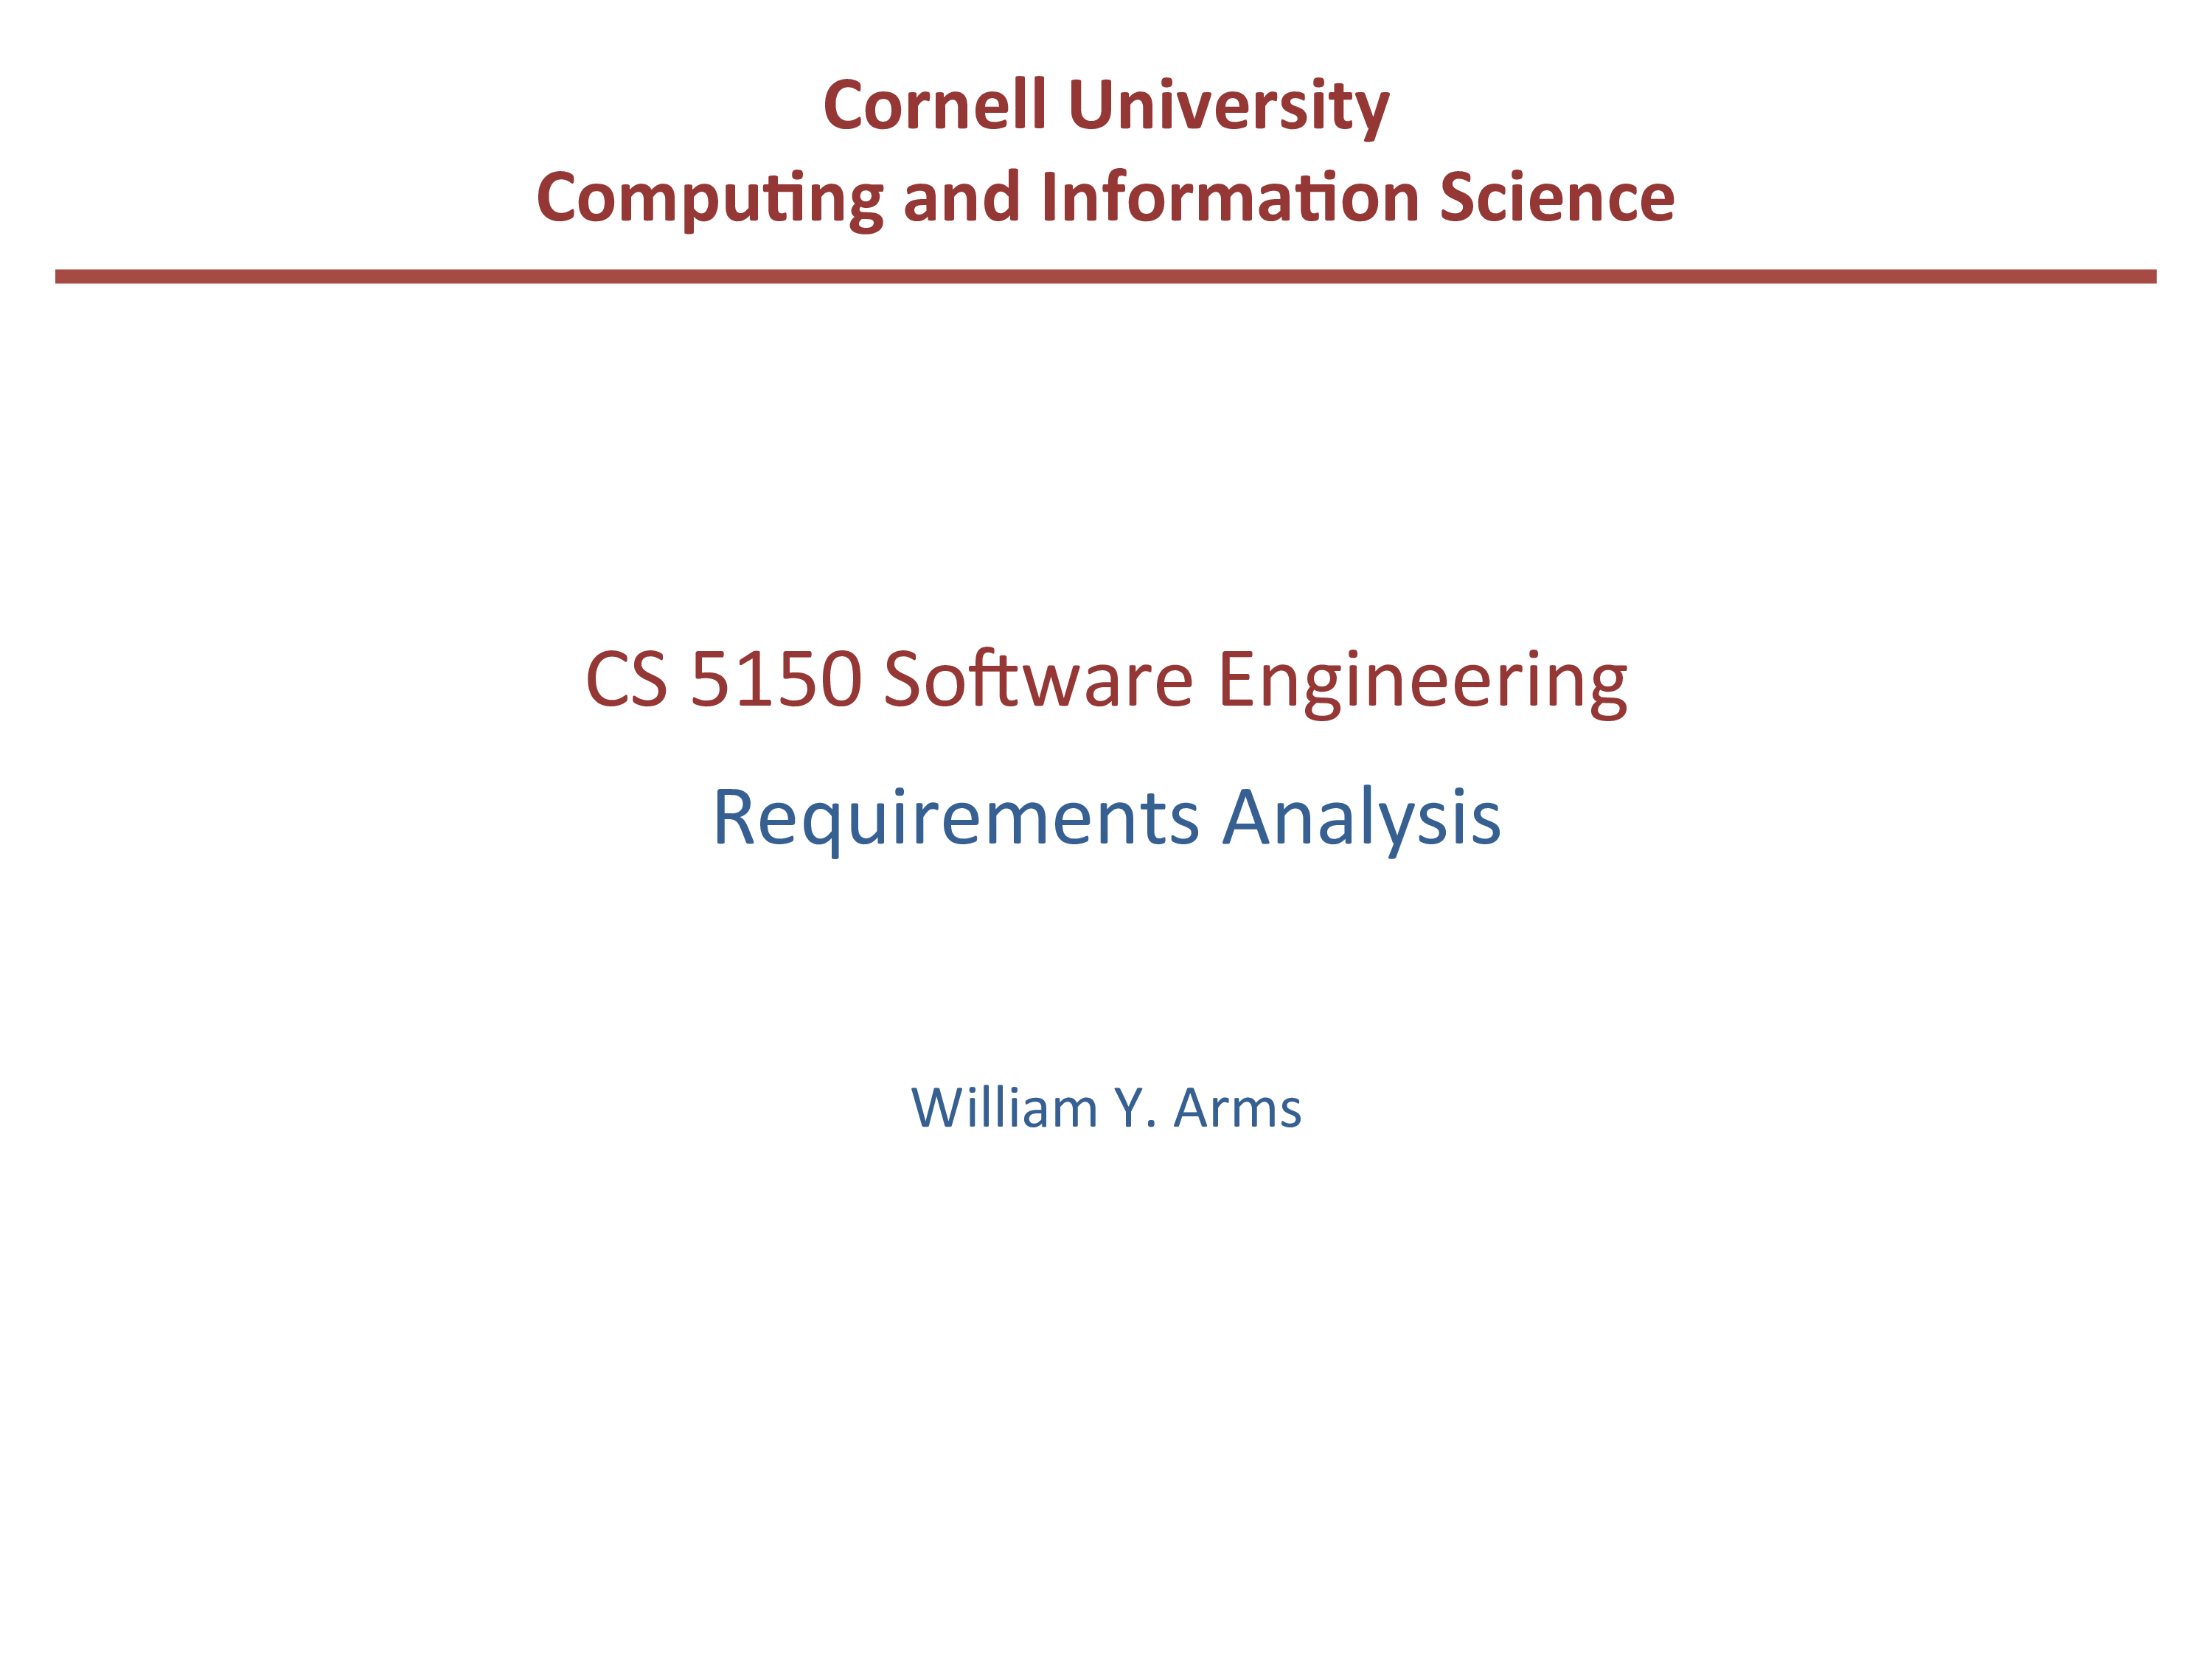 software engineering requirements analysis Hauptschablonenbild